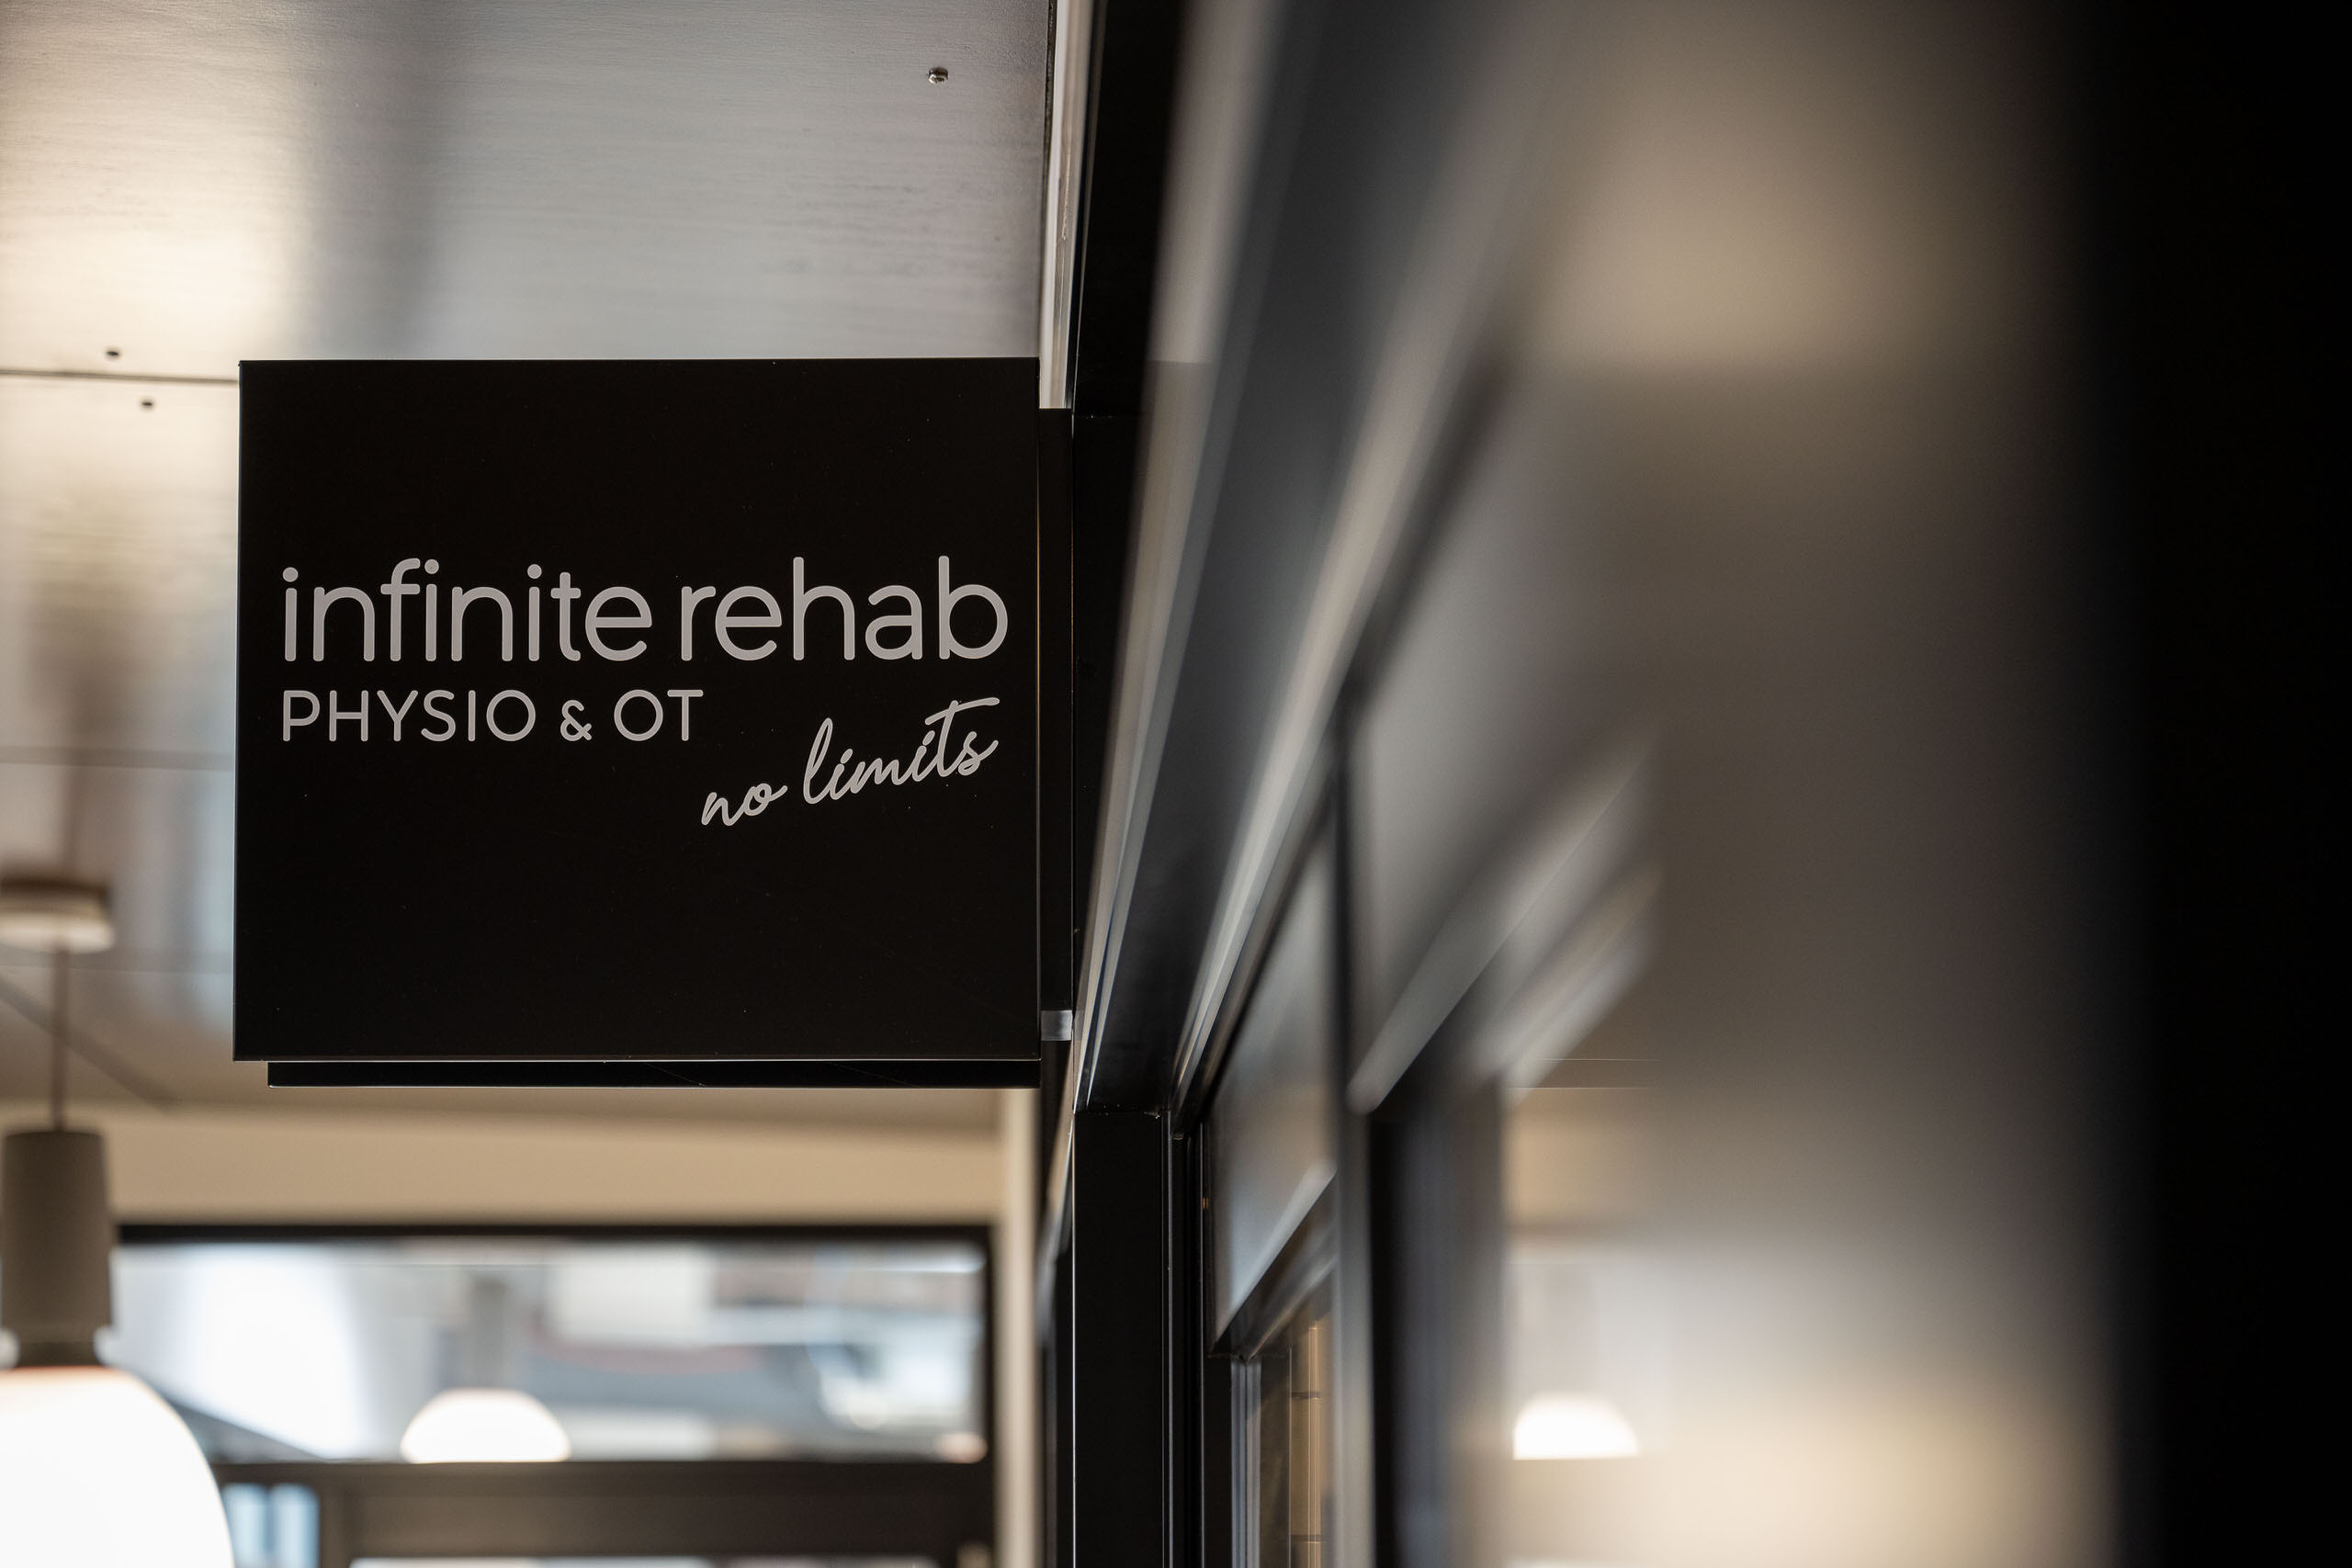 Infinite rehab 6